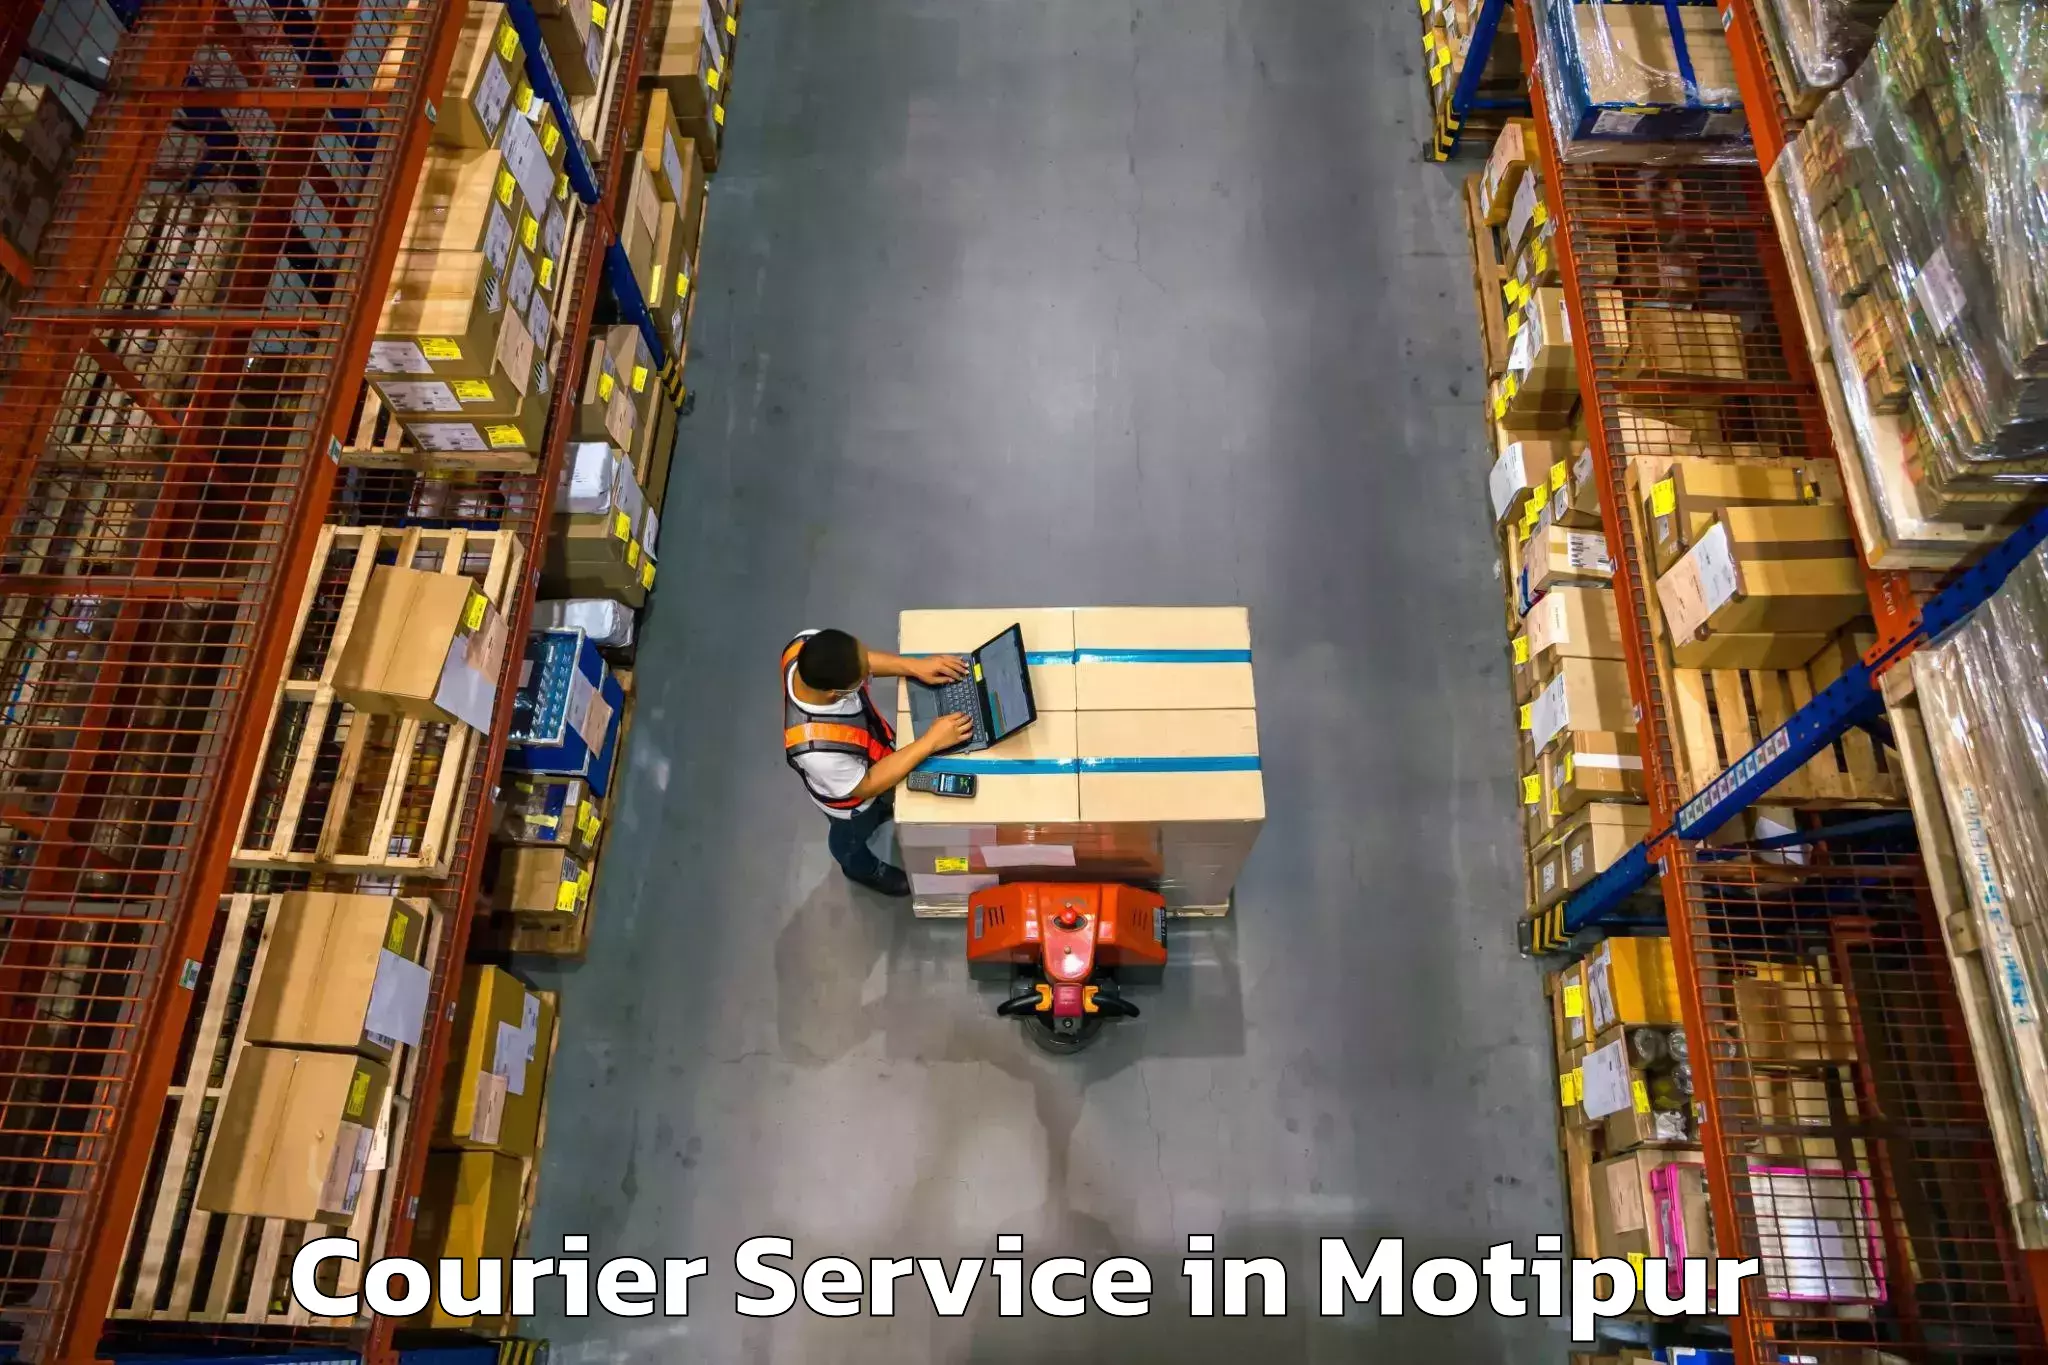 Doorstep delivery service in Motipur